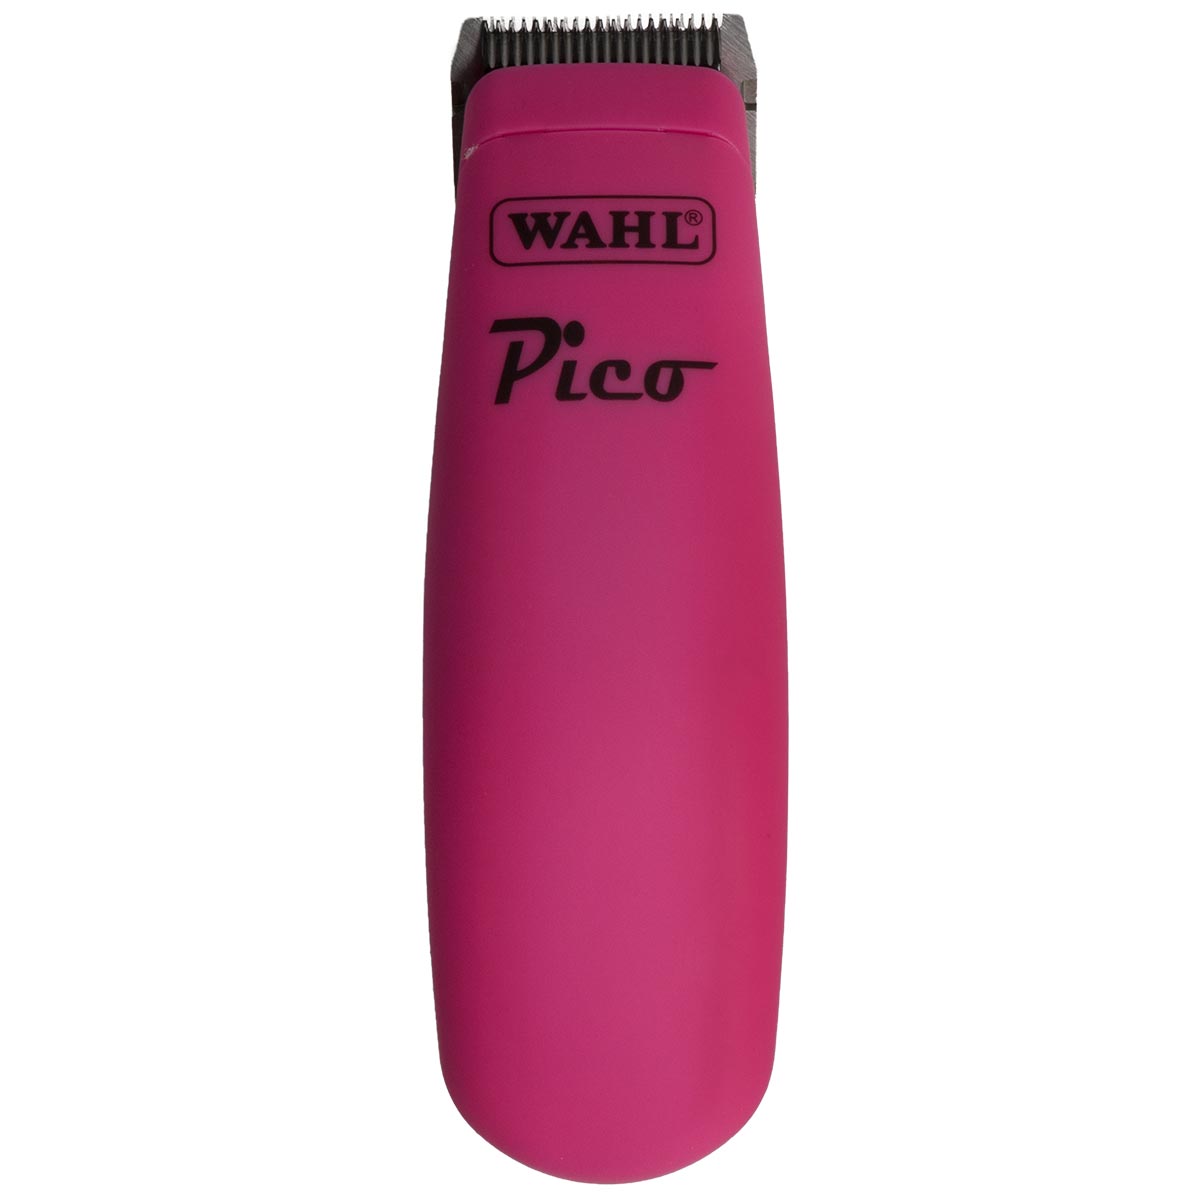 WAHL Pico detaljtrimmer batteri Rosa